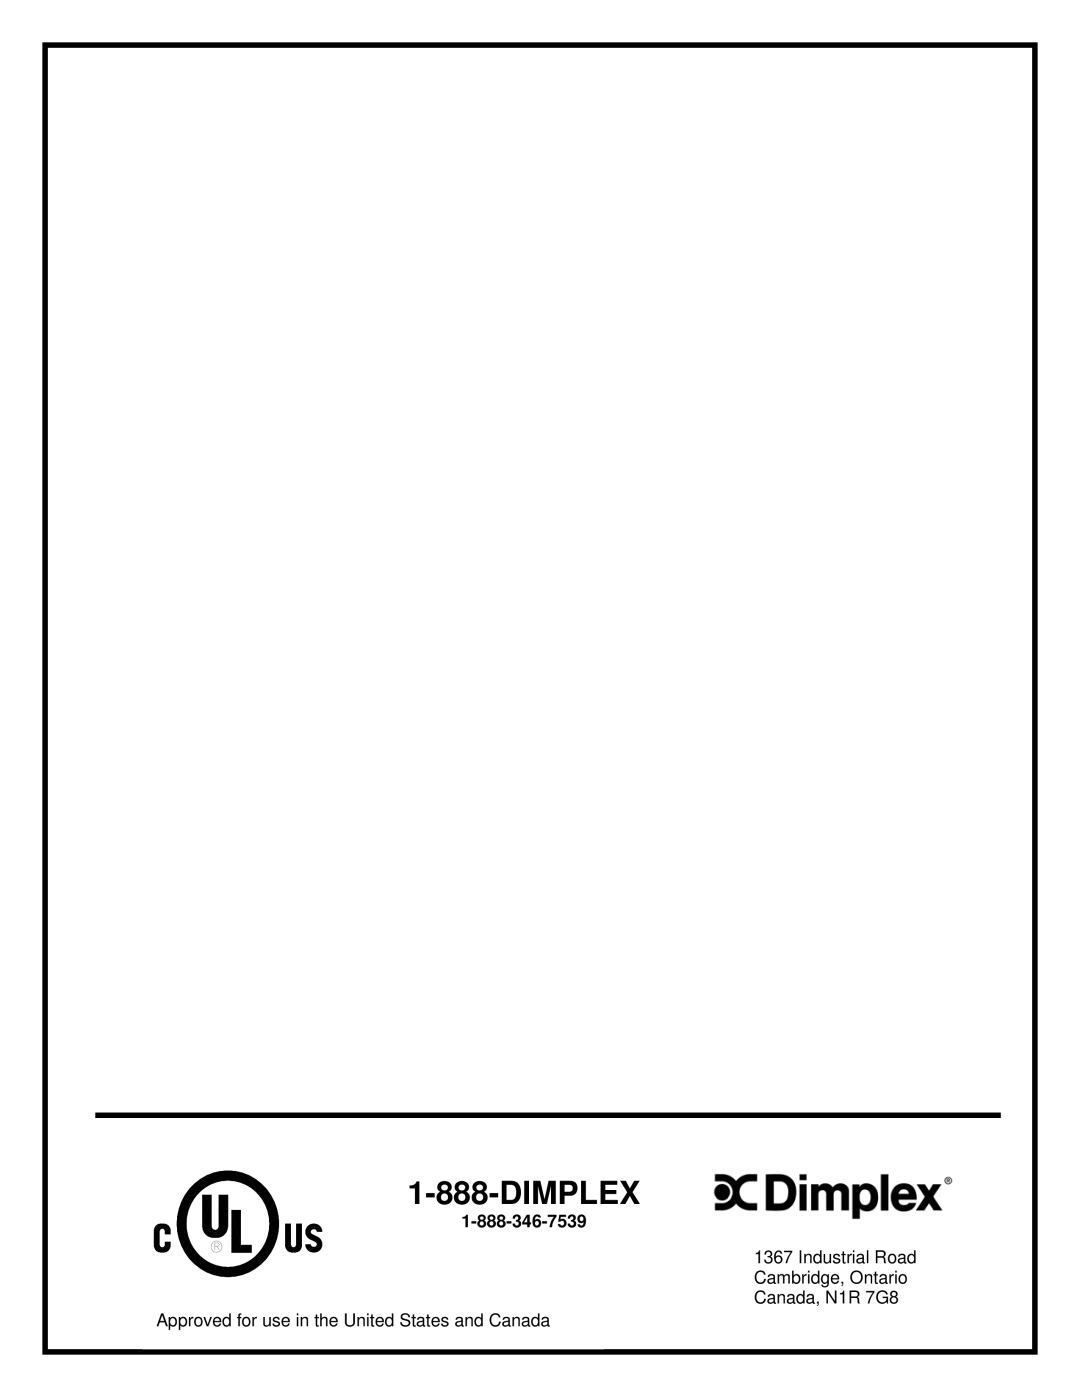 Dimplex BF392SD specifications Dimplex, Industrial Road, Cambridge, Ontario Canada, N1R 7G8 